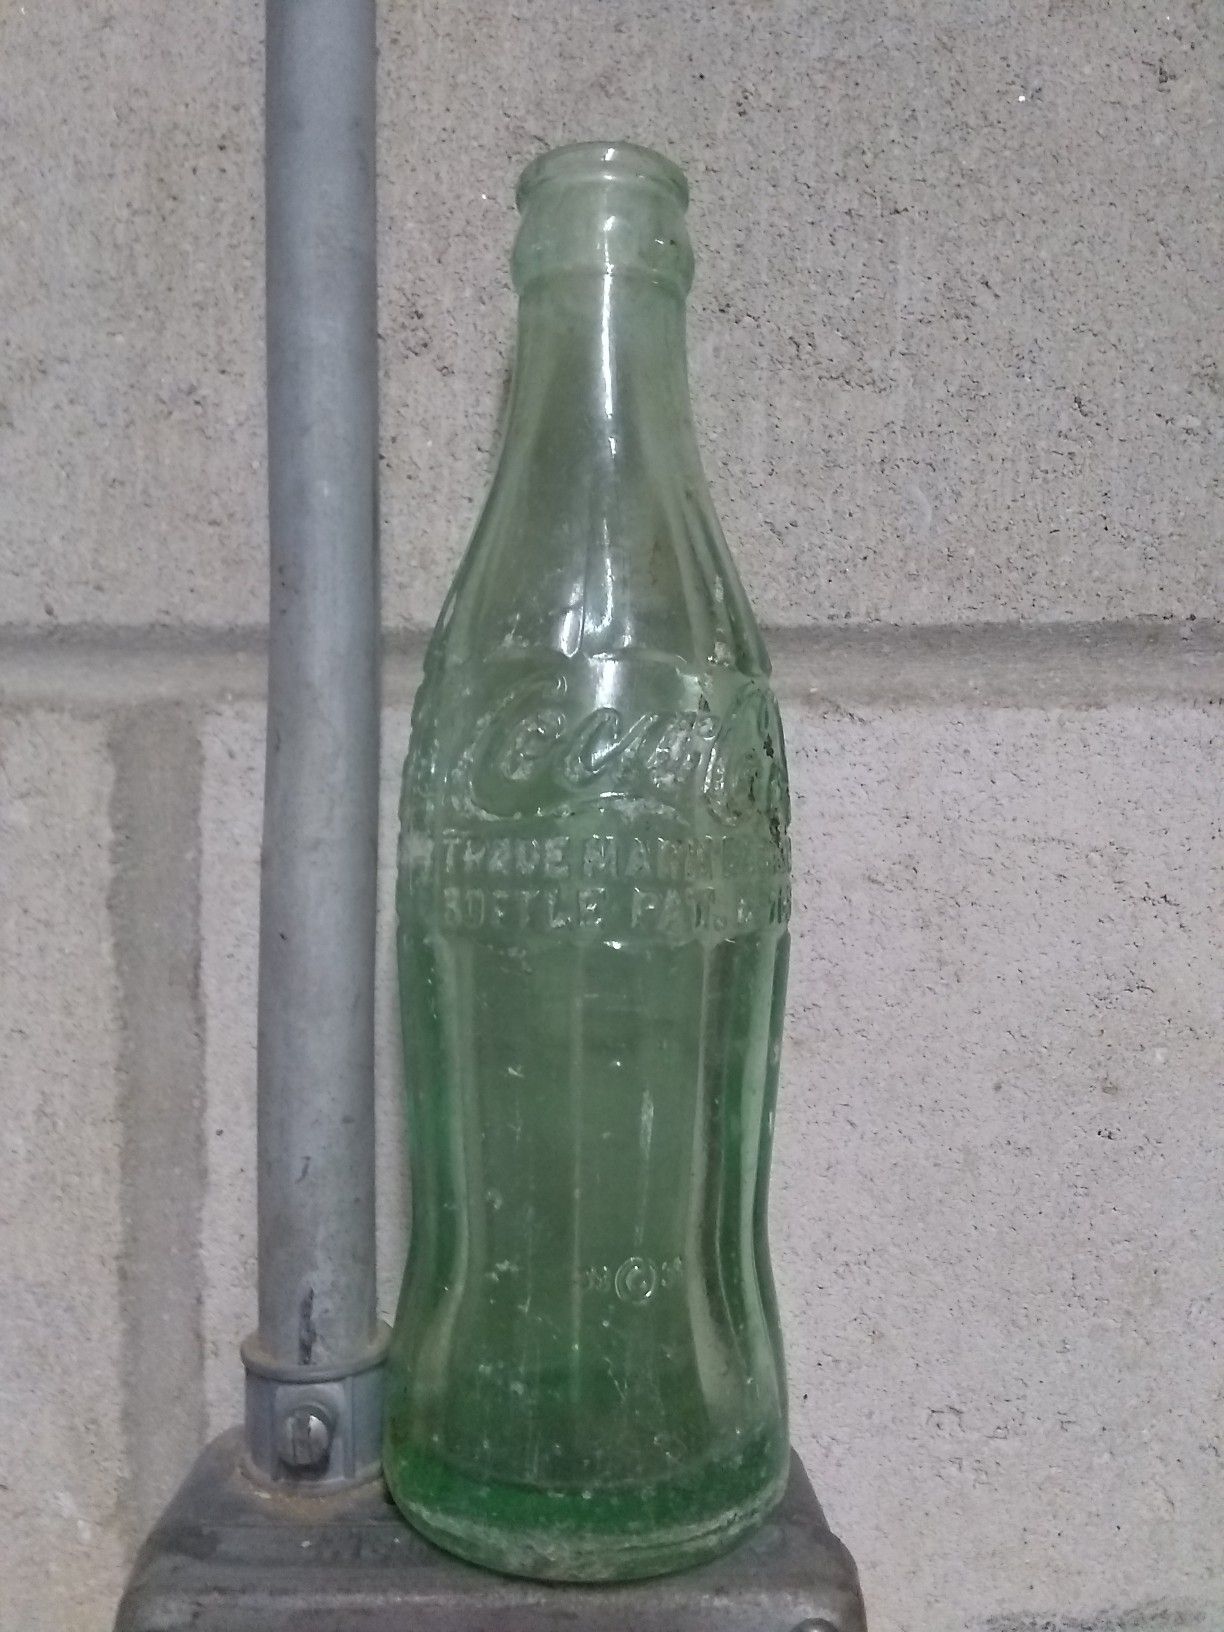 Antique Coca-Cola bottle early 1930s